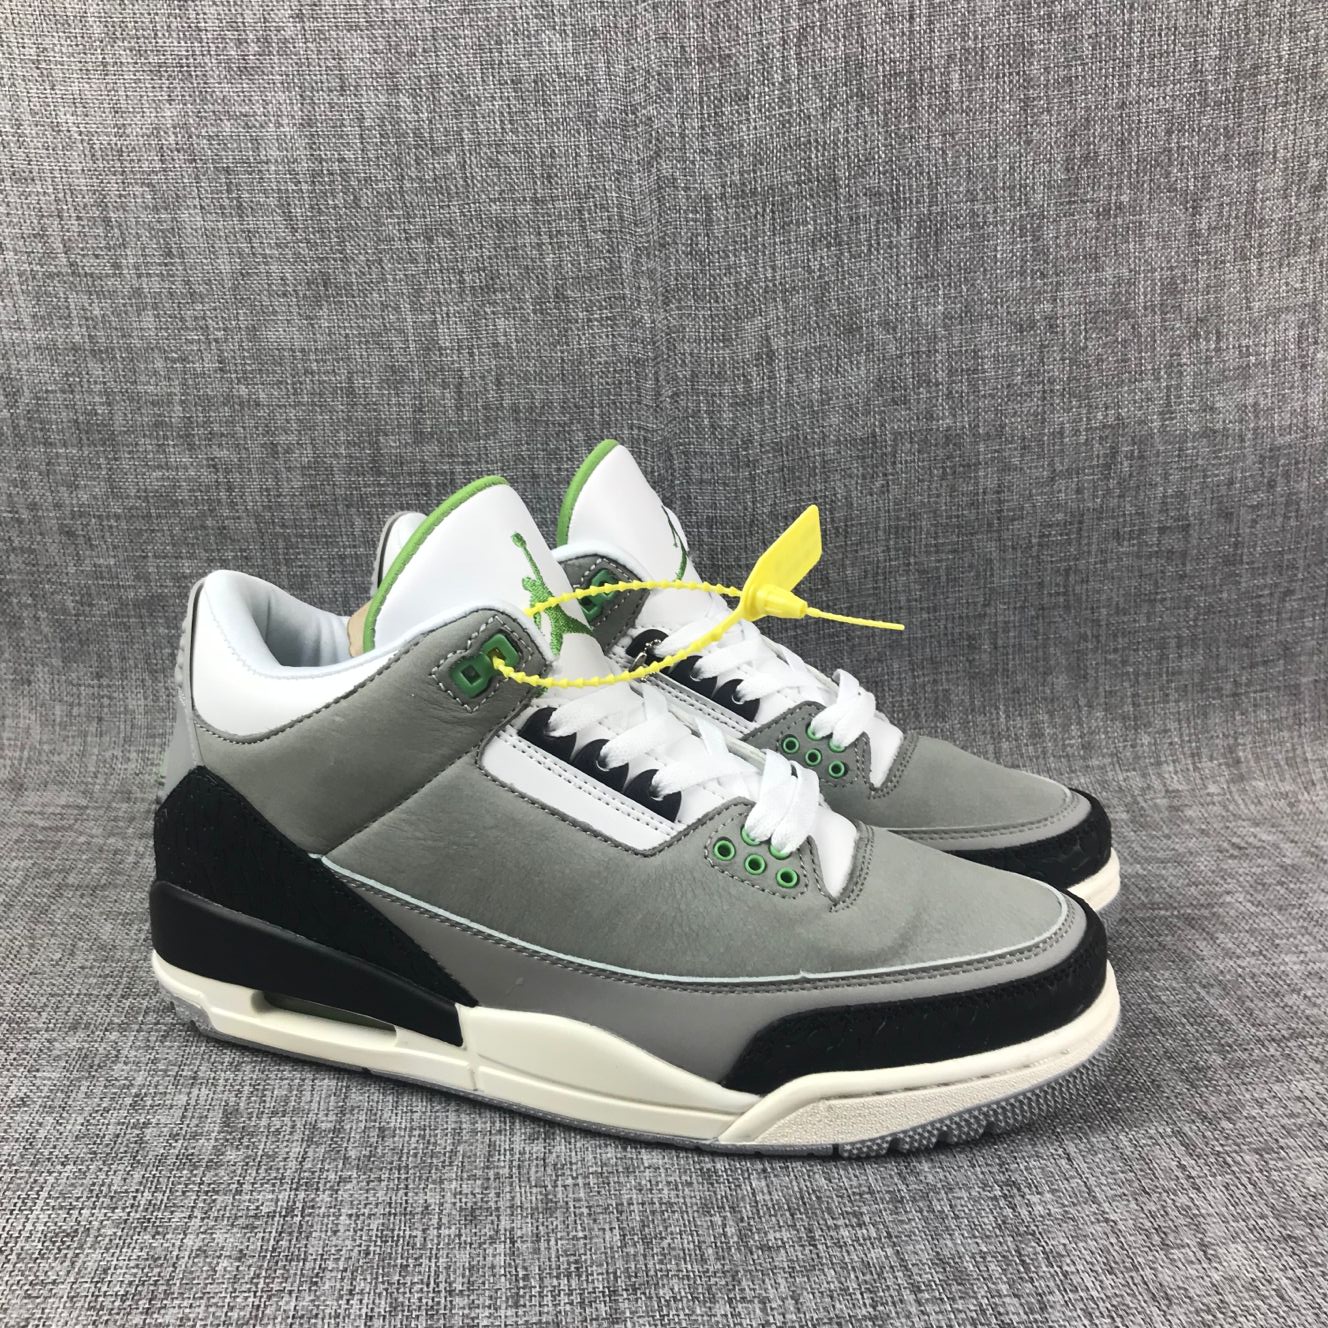 Air Jordan 3 Chlorophyll Green Black White Shoes - Click Image to Close